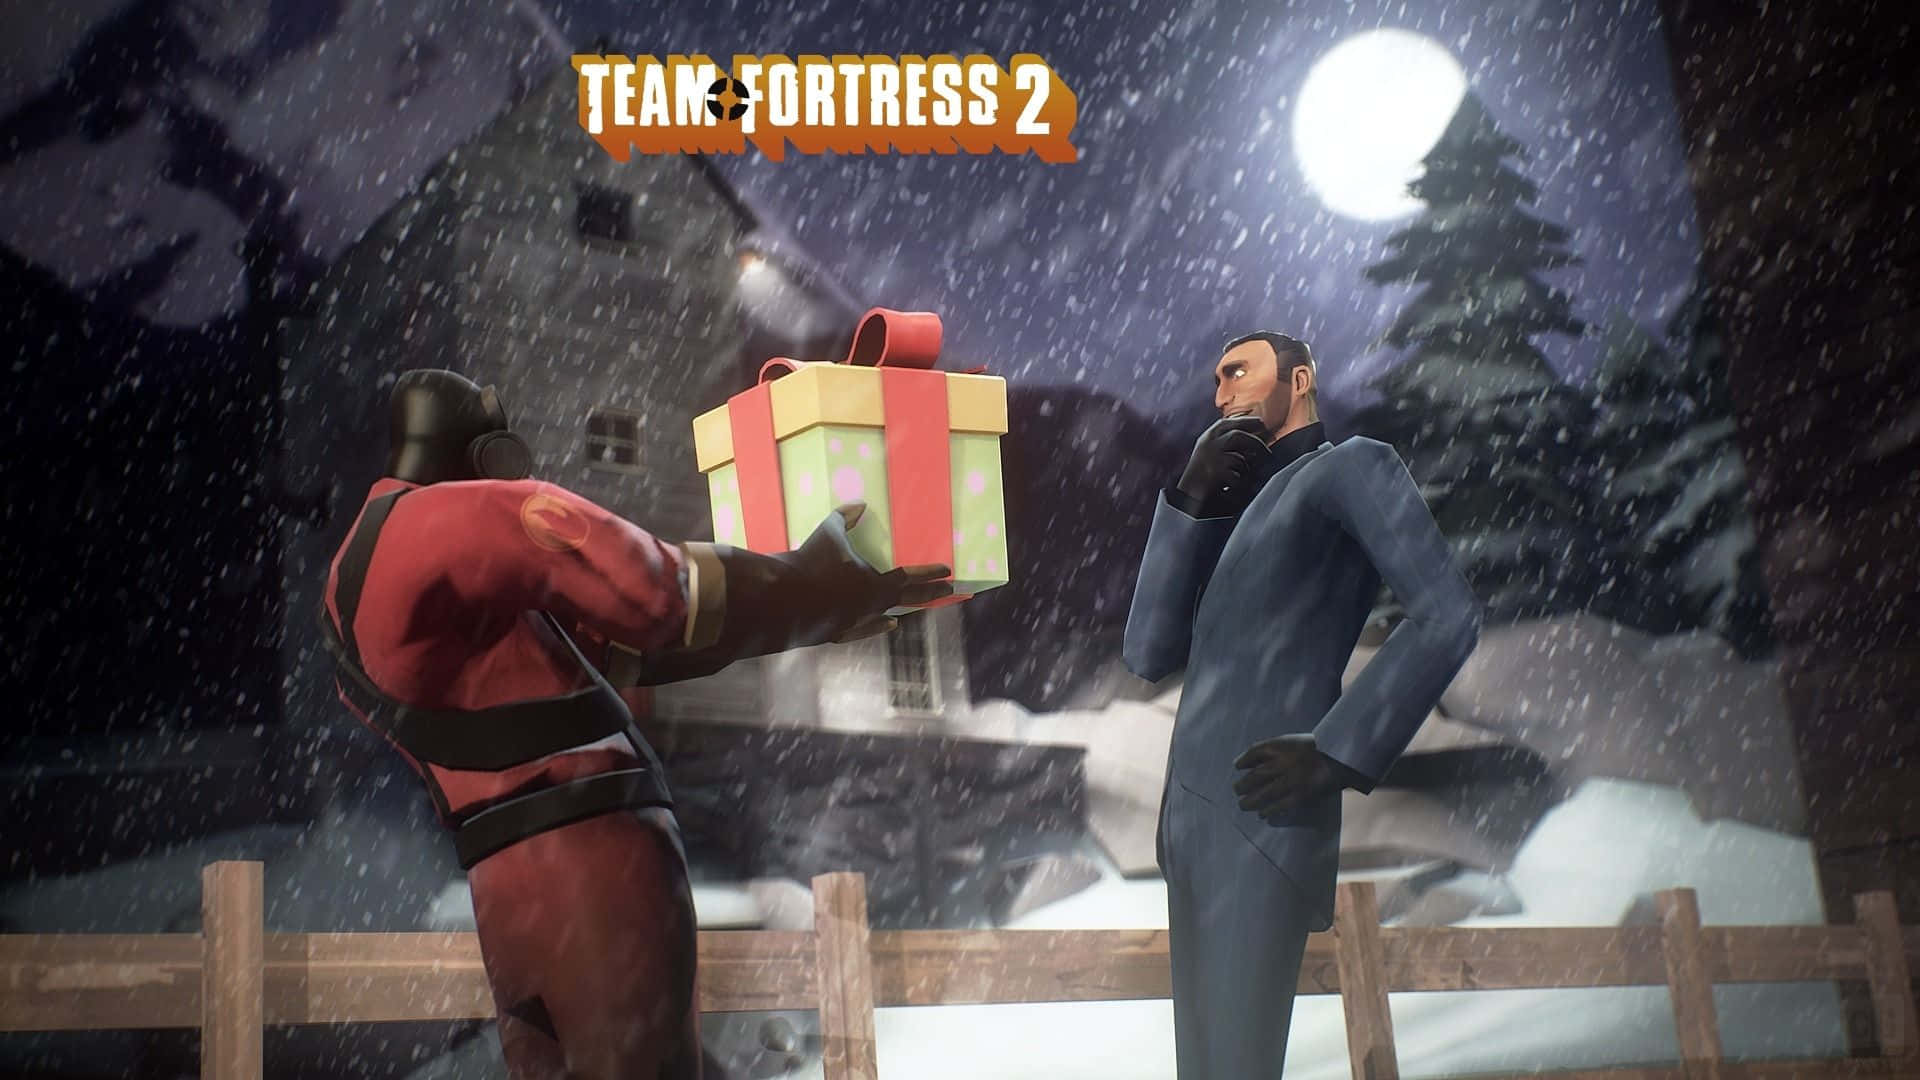 Enhd-bakgrundsbild Med Team Fortress 2-logotypen.